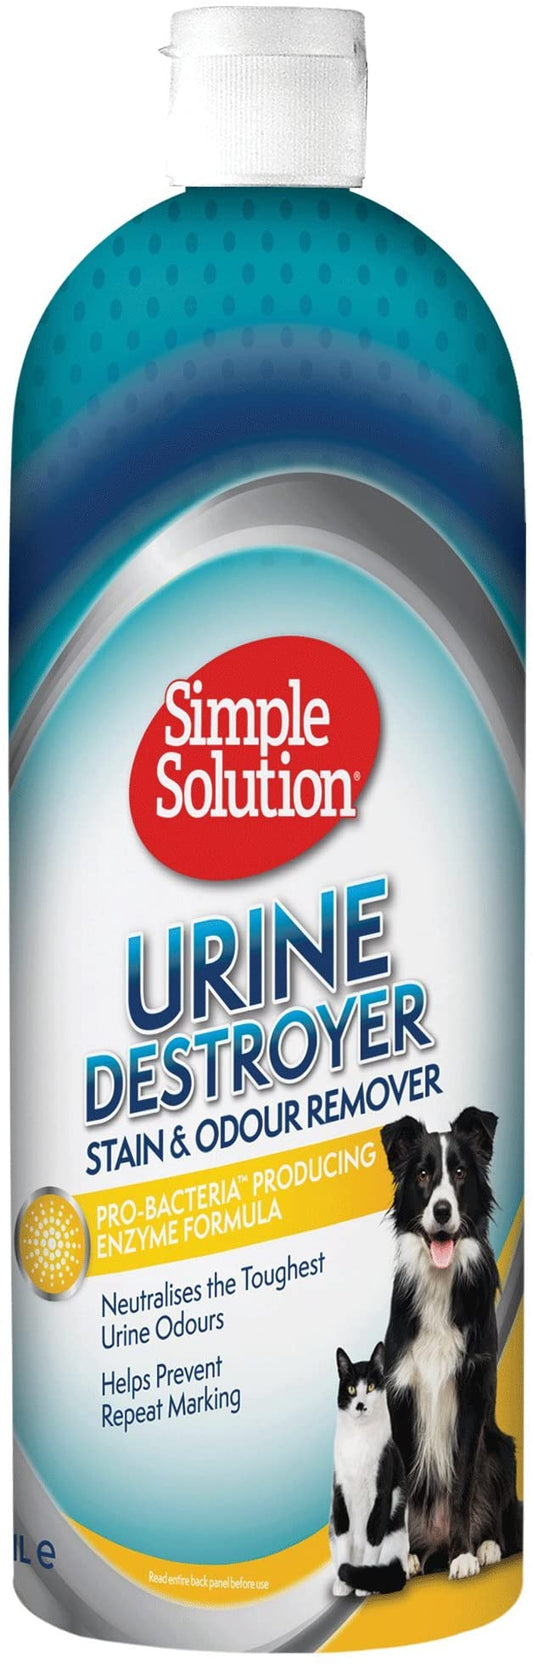 Simple solution- urine destroyer